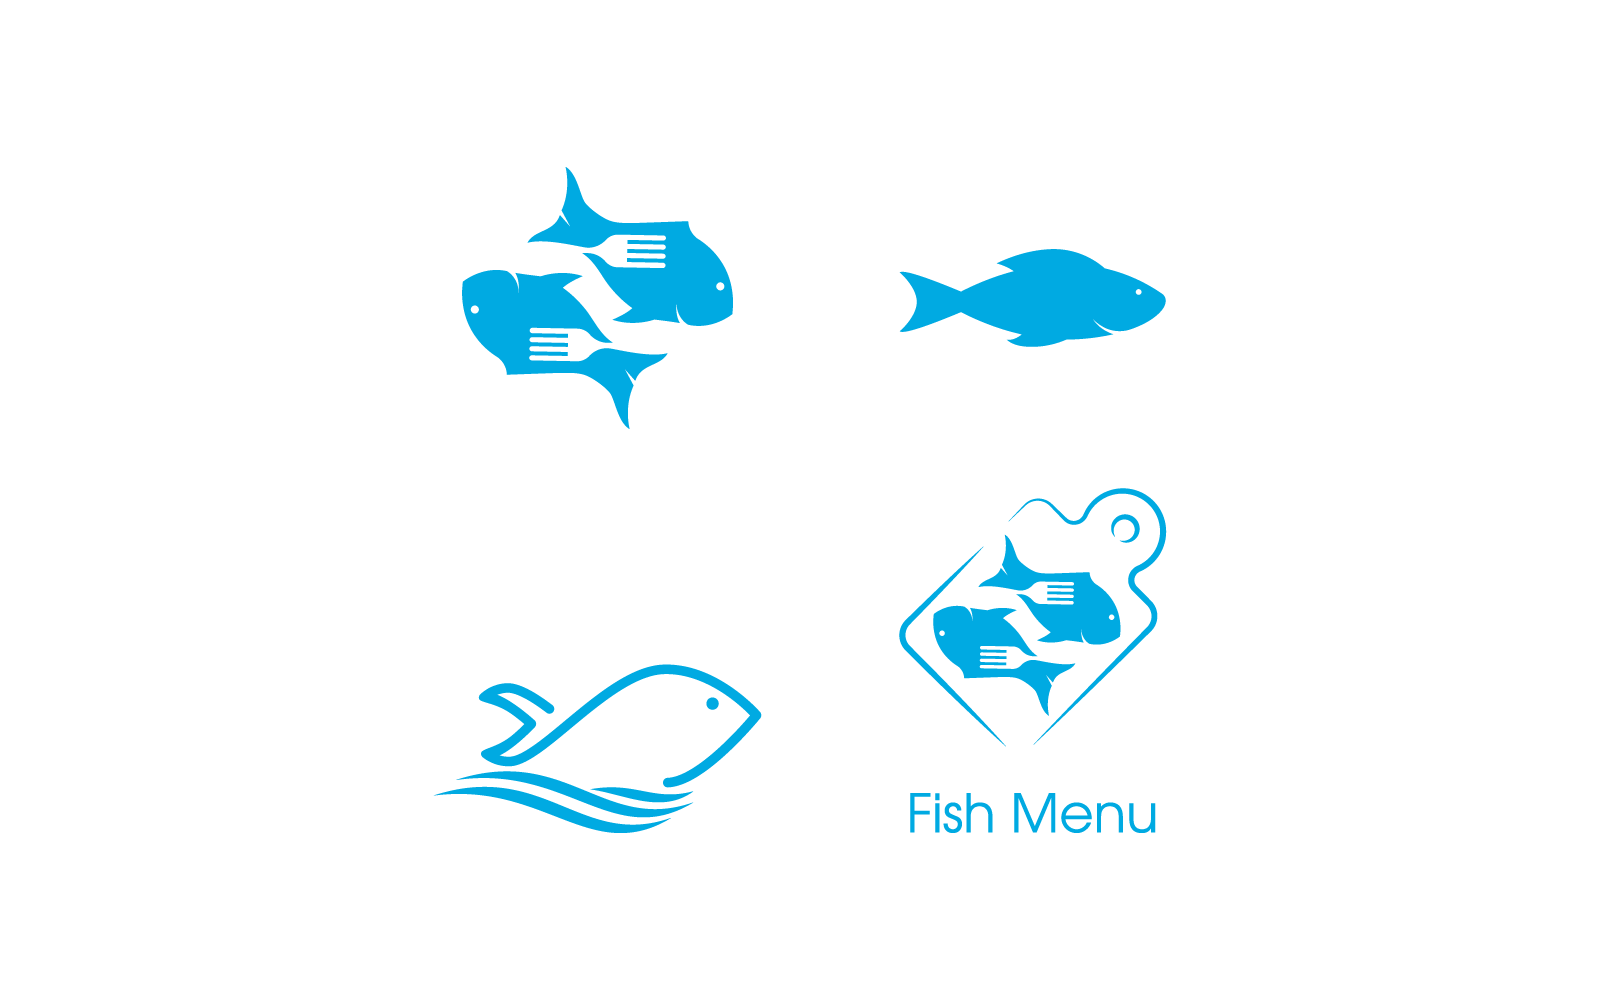 Fish design illustration logo template